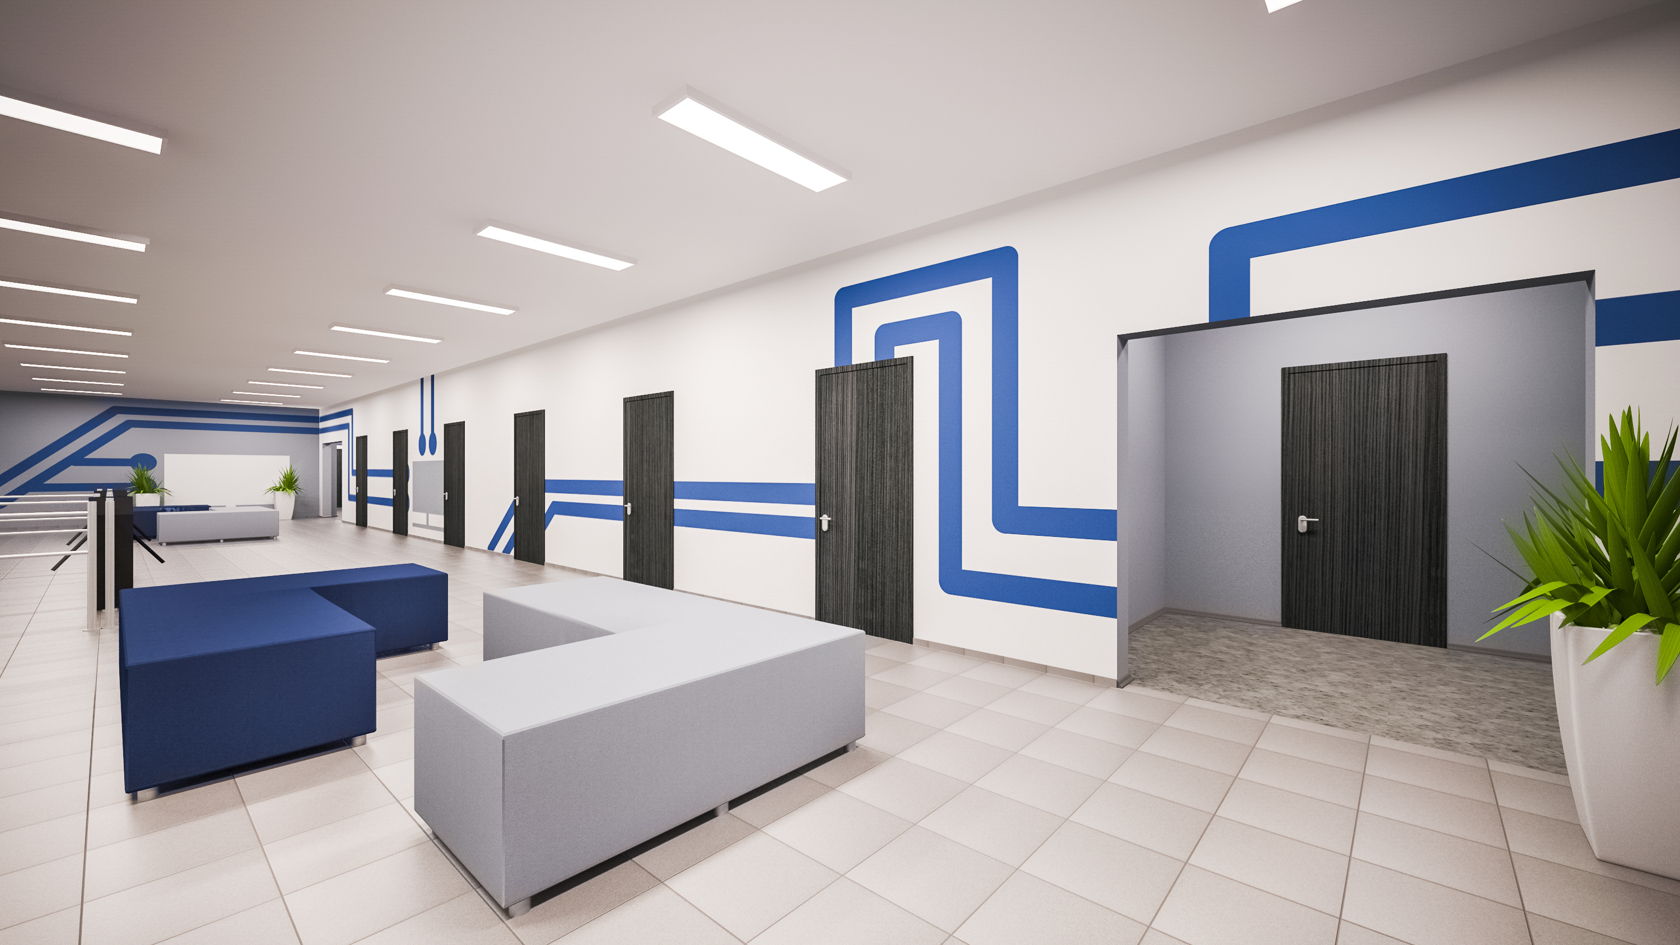 Дизайн коридора в школе - 74 фото